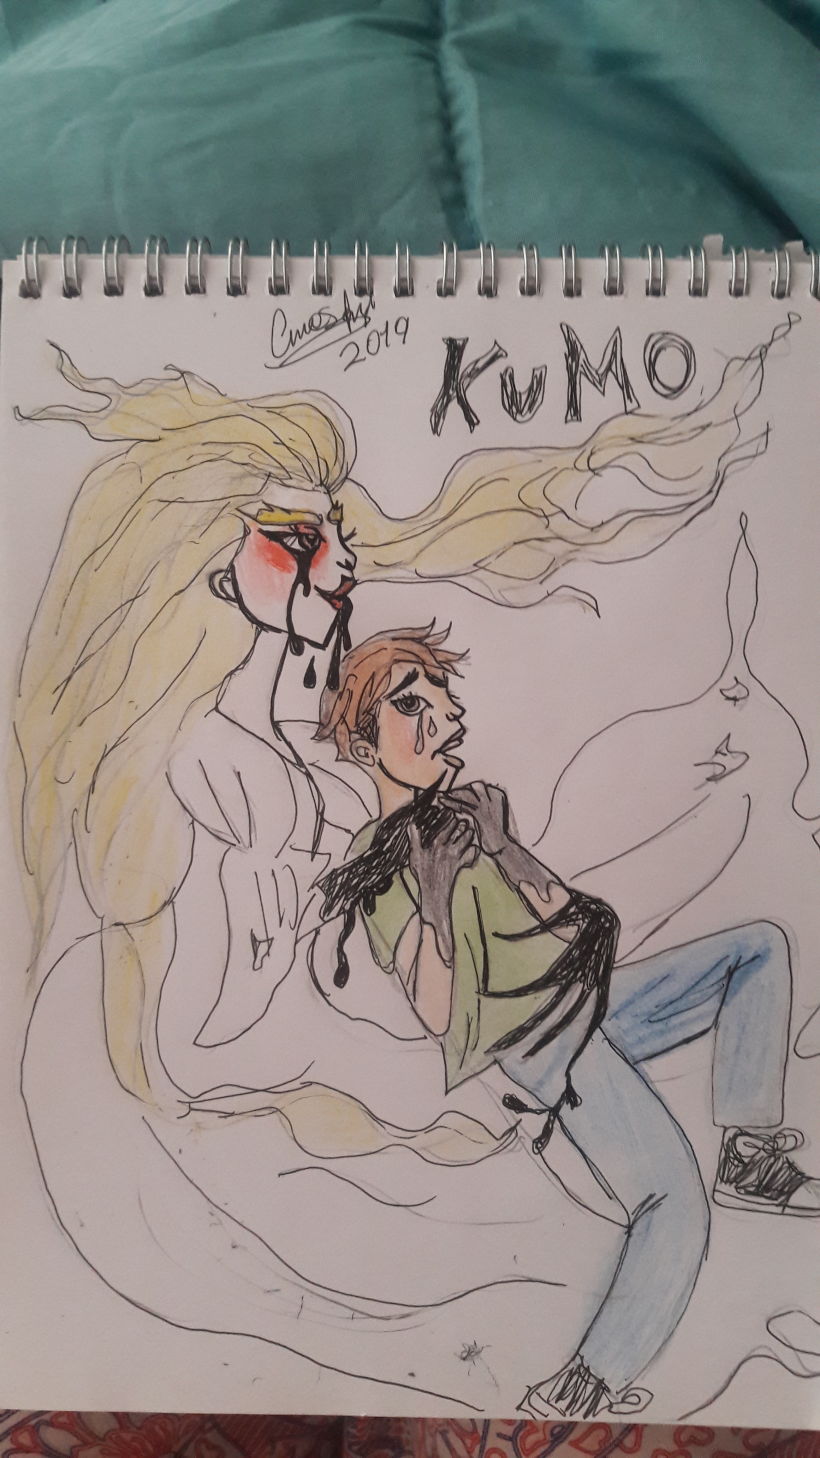 KUMO y Alejandro 